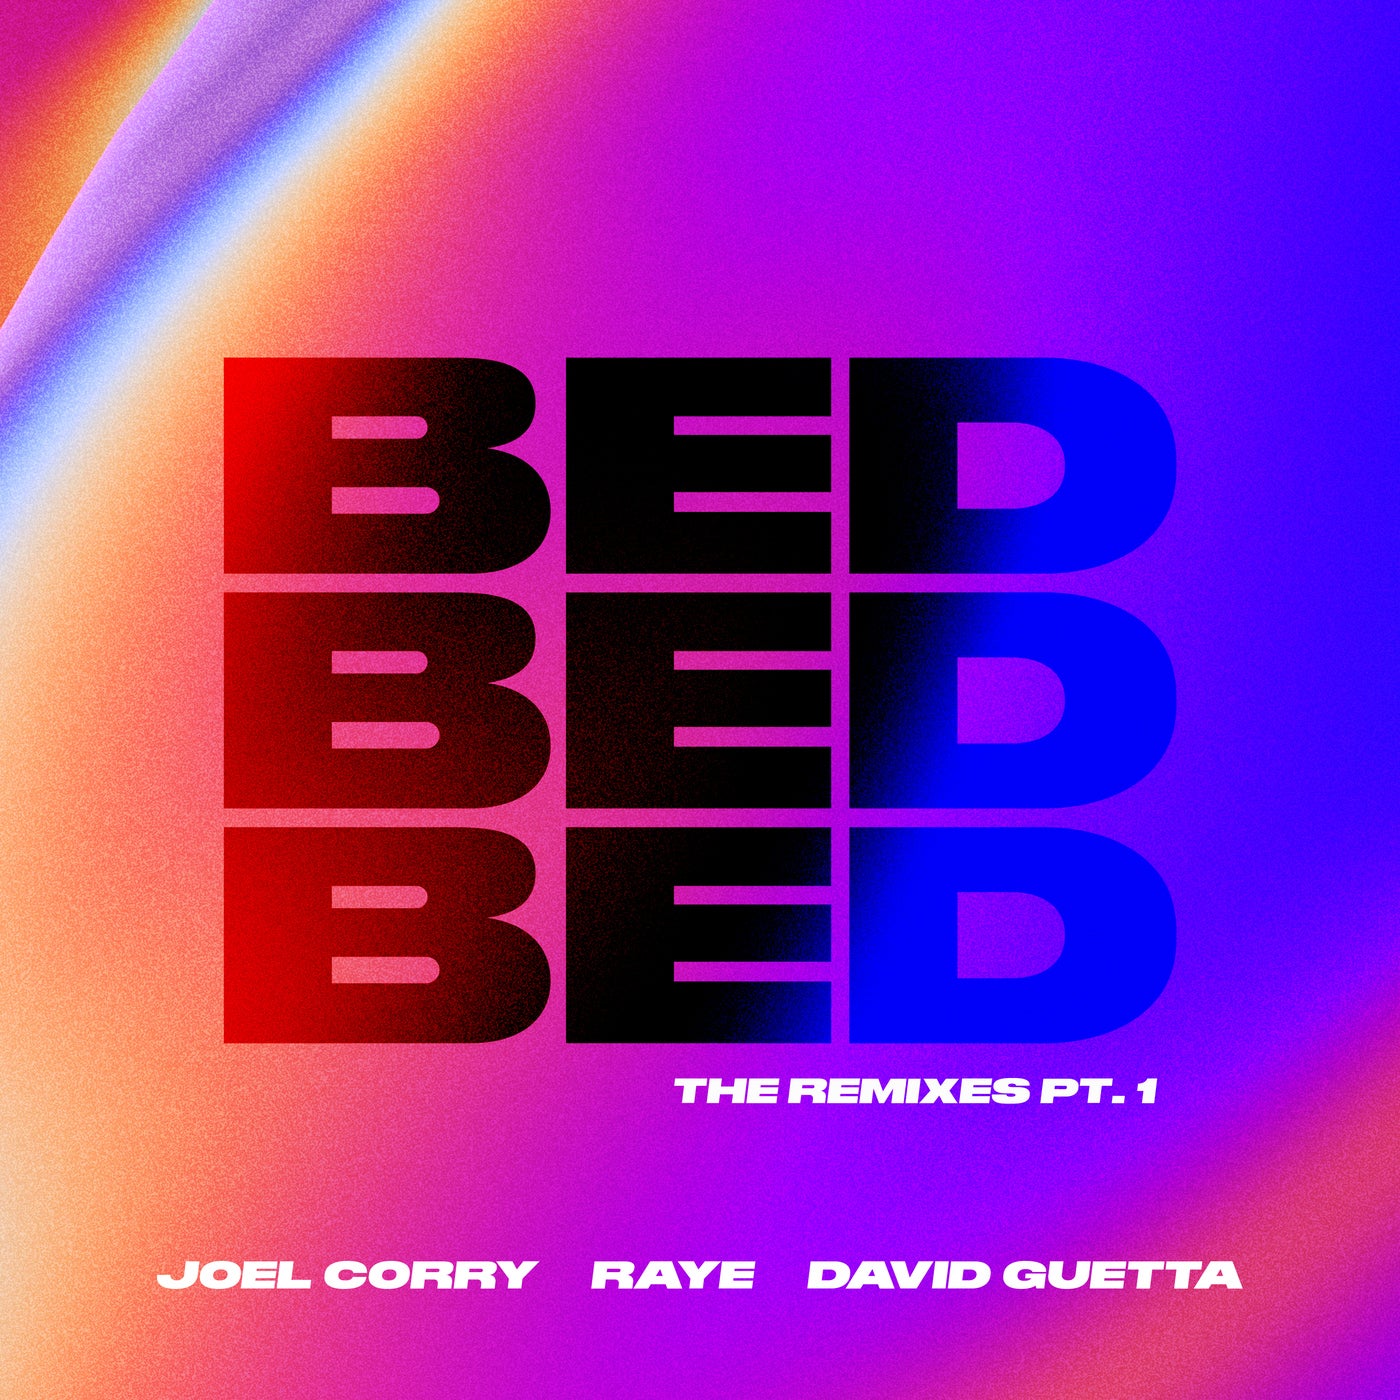 David Guetta, Raye, Joel Corry – BED (The Remixes) [Pt. 1] [190296722912]